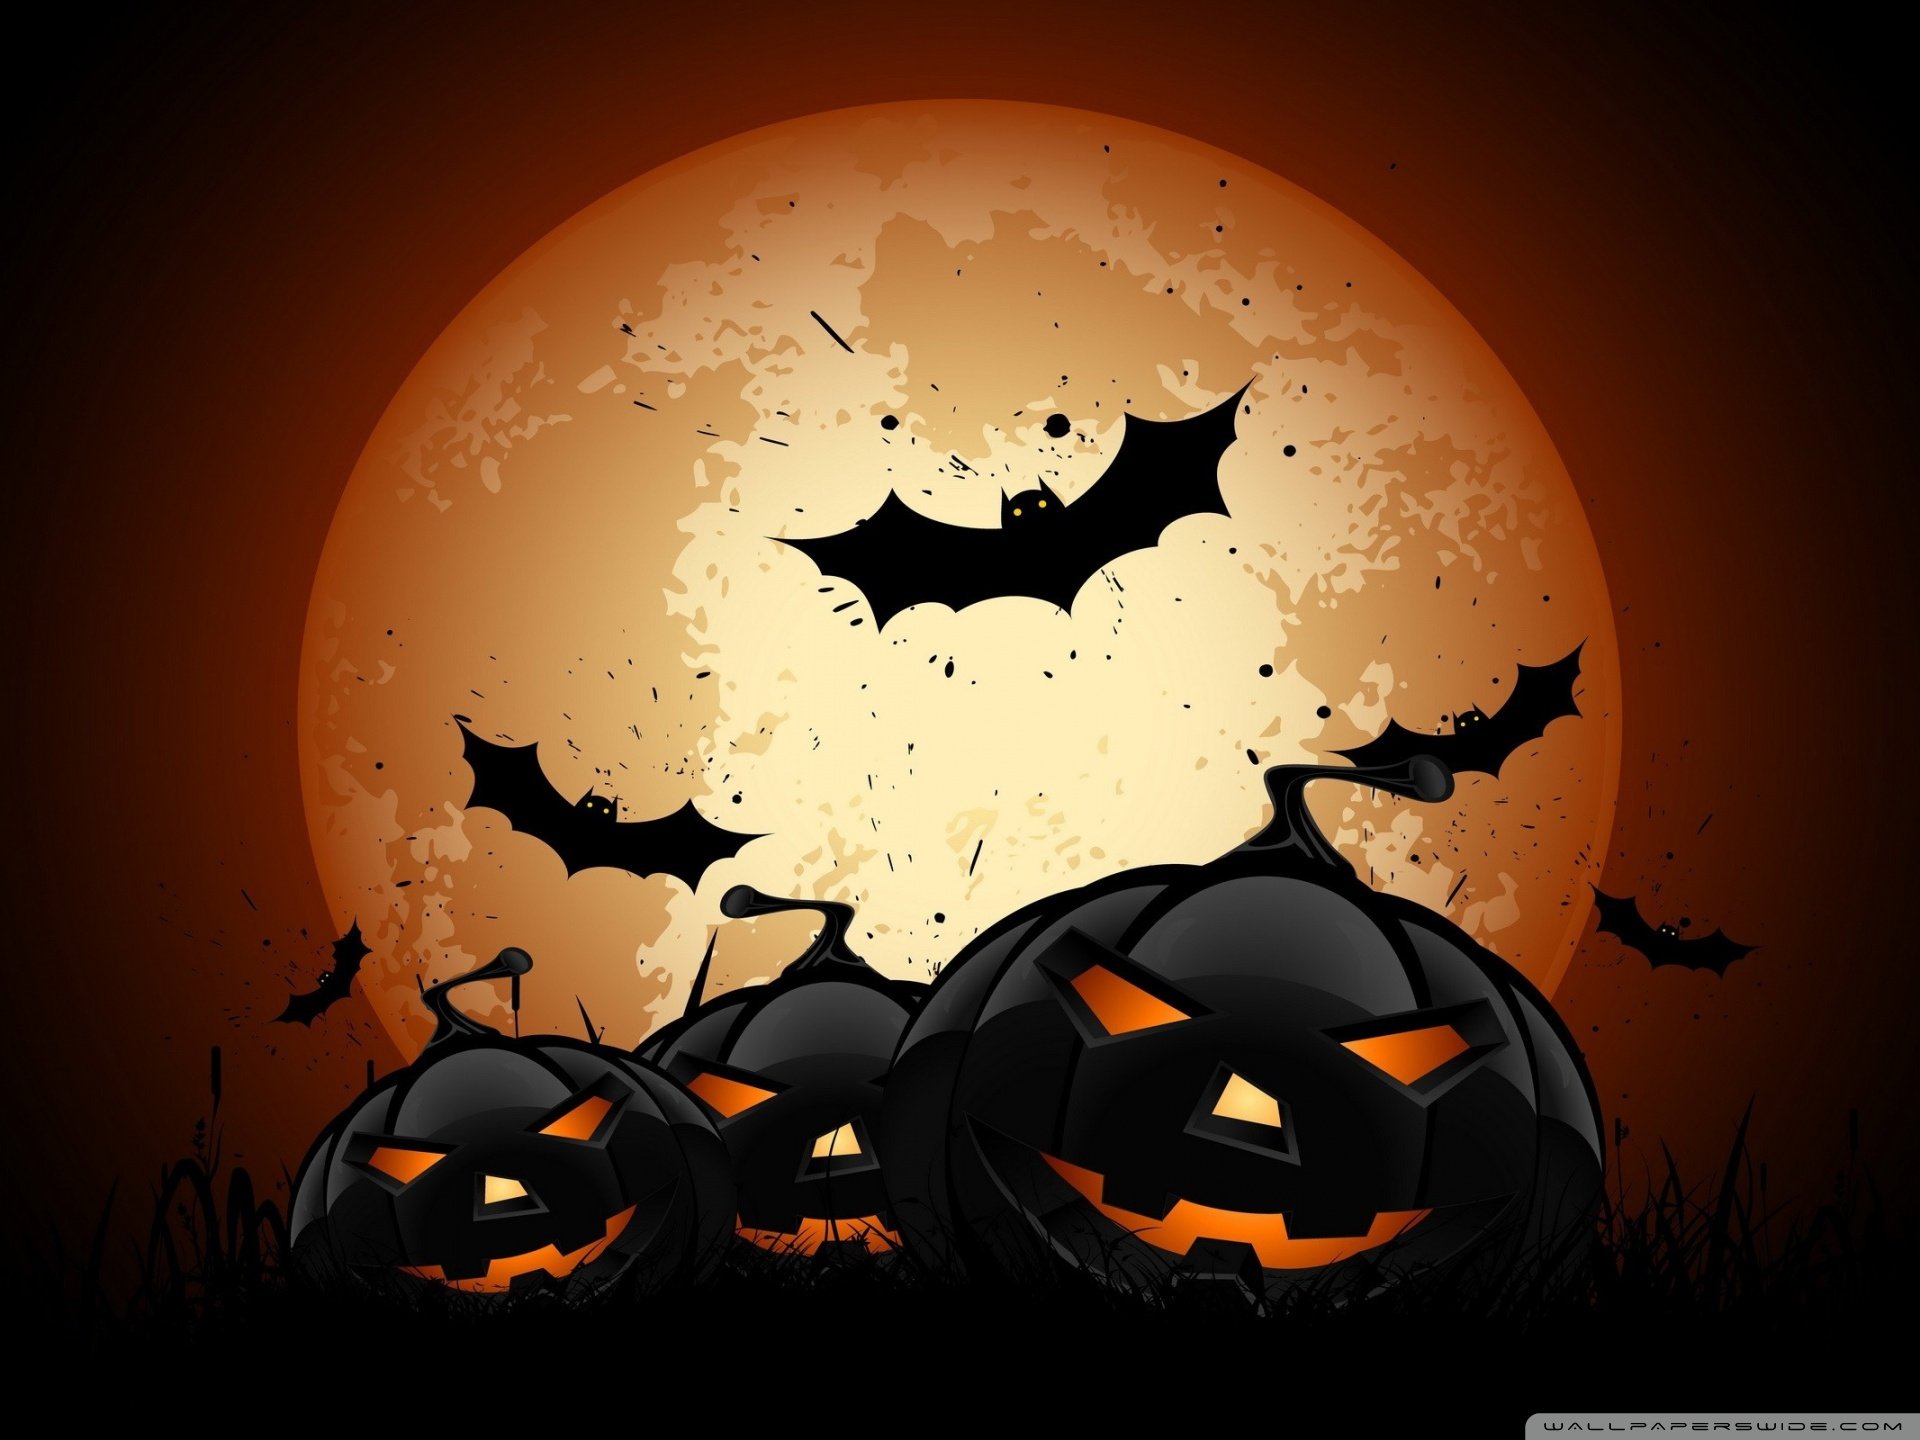 Scary Halloween Pumpkins Ultra HD Desktop Background Wallpaper for 4K UHD TV, Tablet